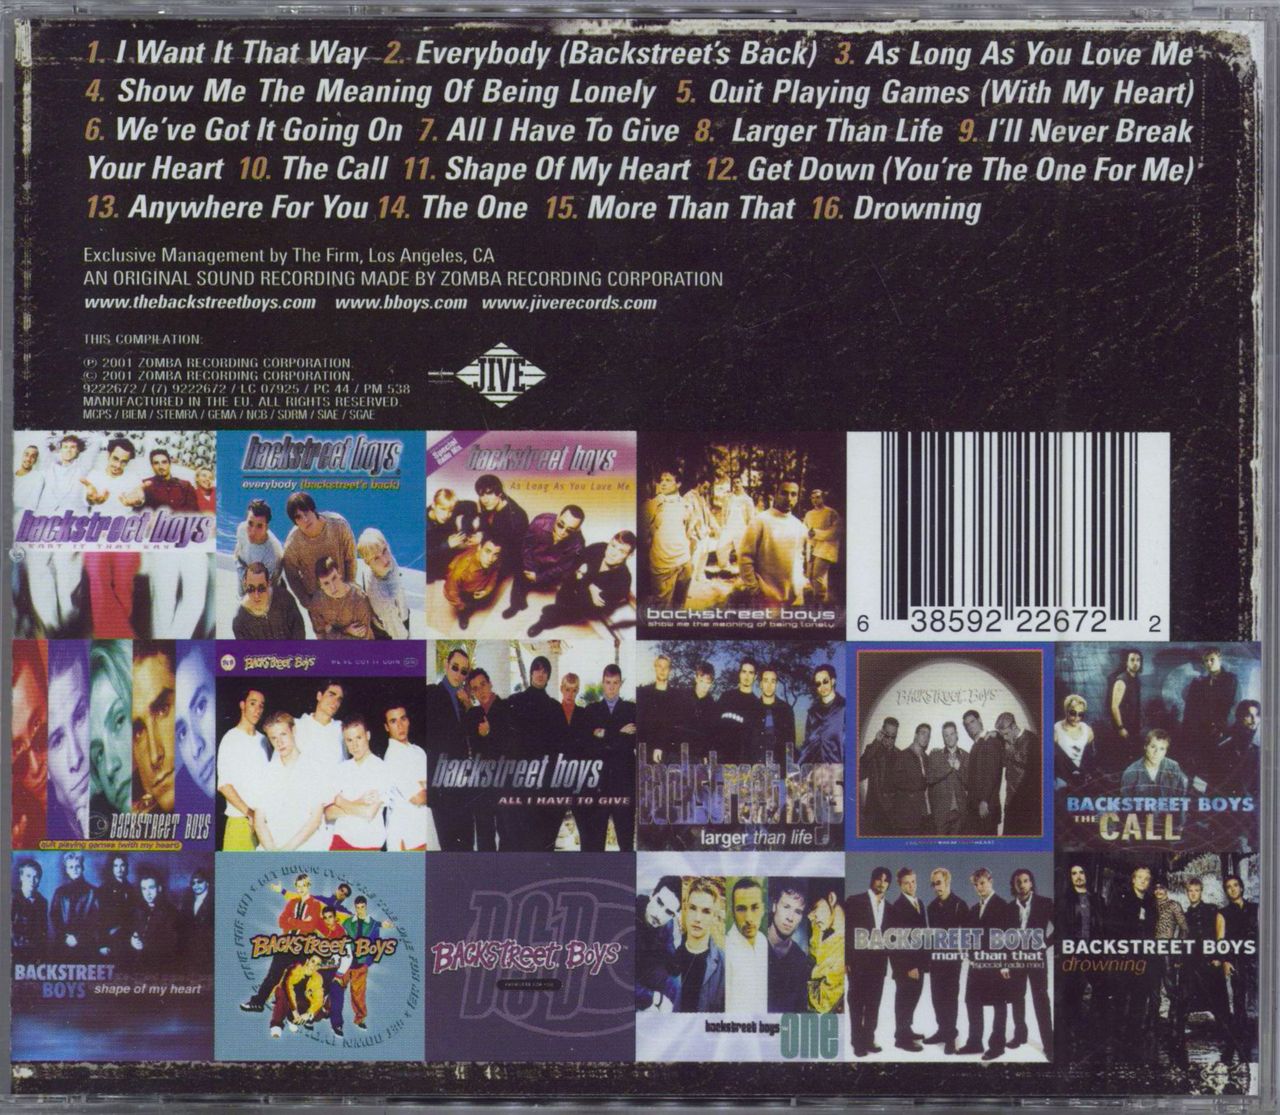 Backstreet Boys Greatest Hits Chapter One UK CD album — RareVinyl.com